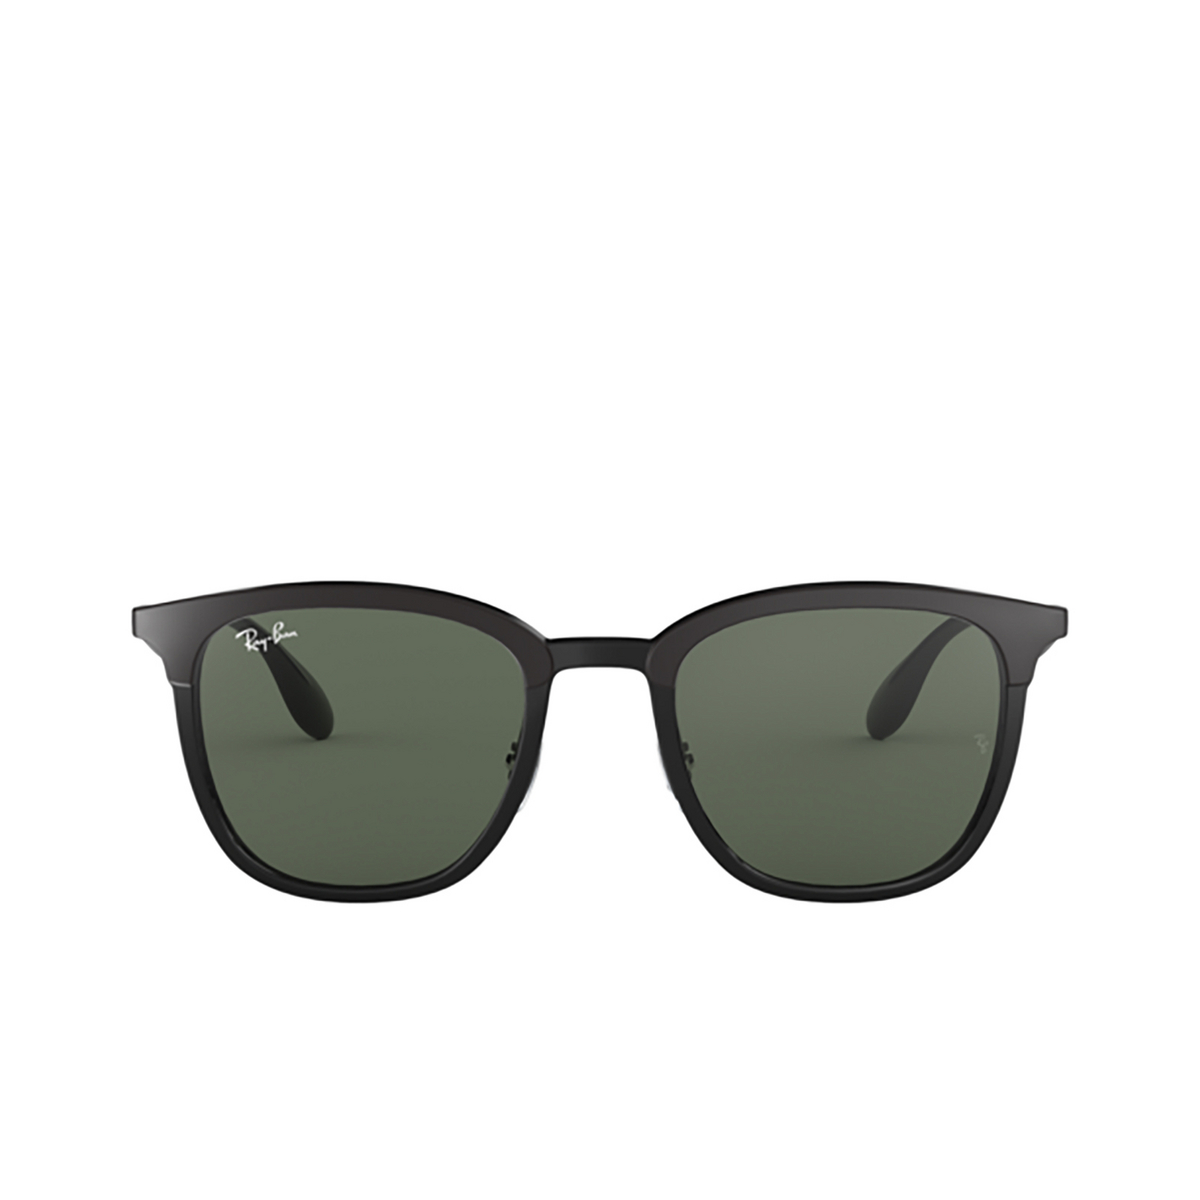 Ray-Ban® Square Sunglasses: RB4278 color 628271 Black / Matte Black - 1/3